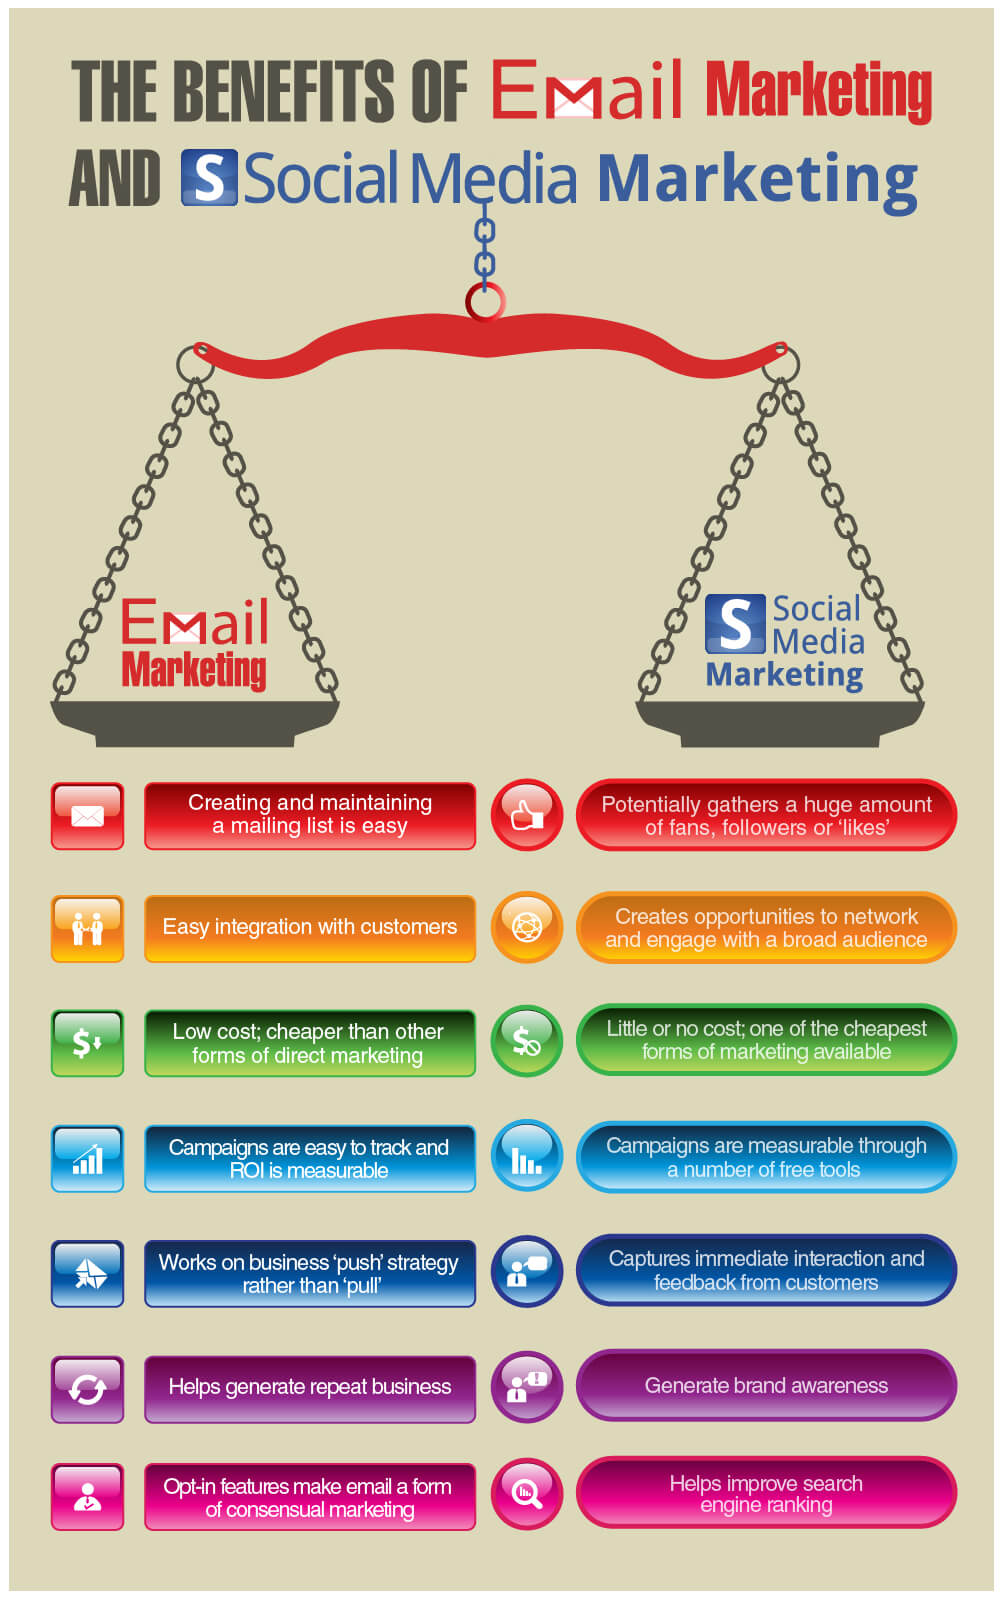 infografia_bebeficios_email_marketing_vs_socialmedia_marketing